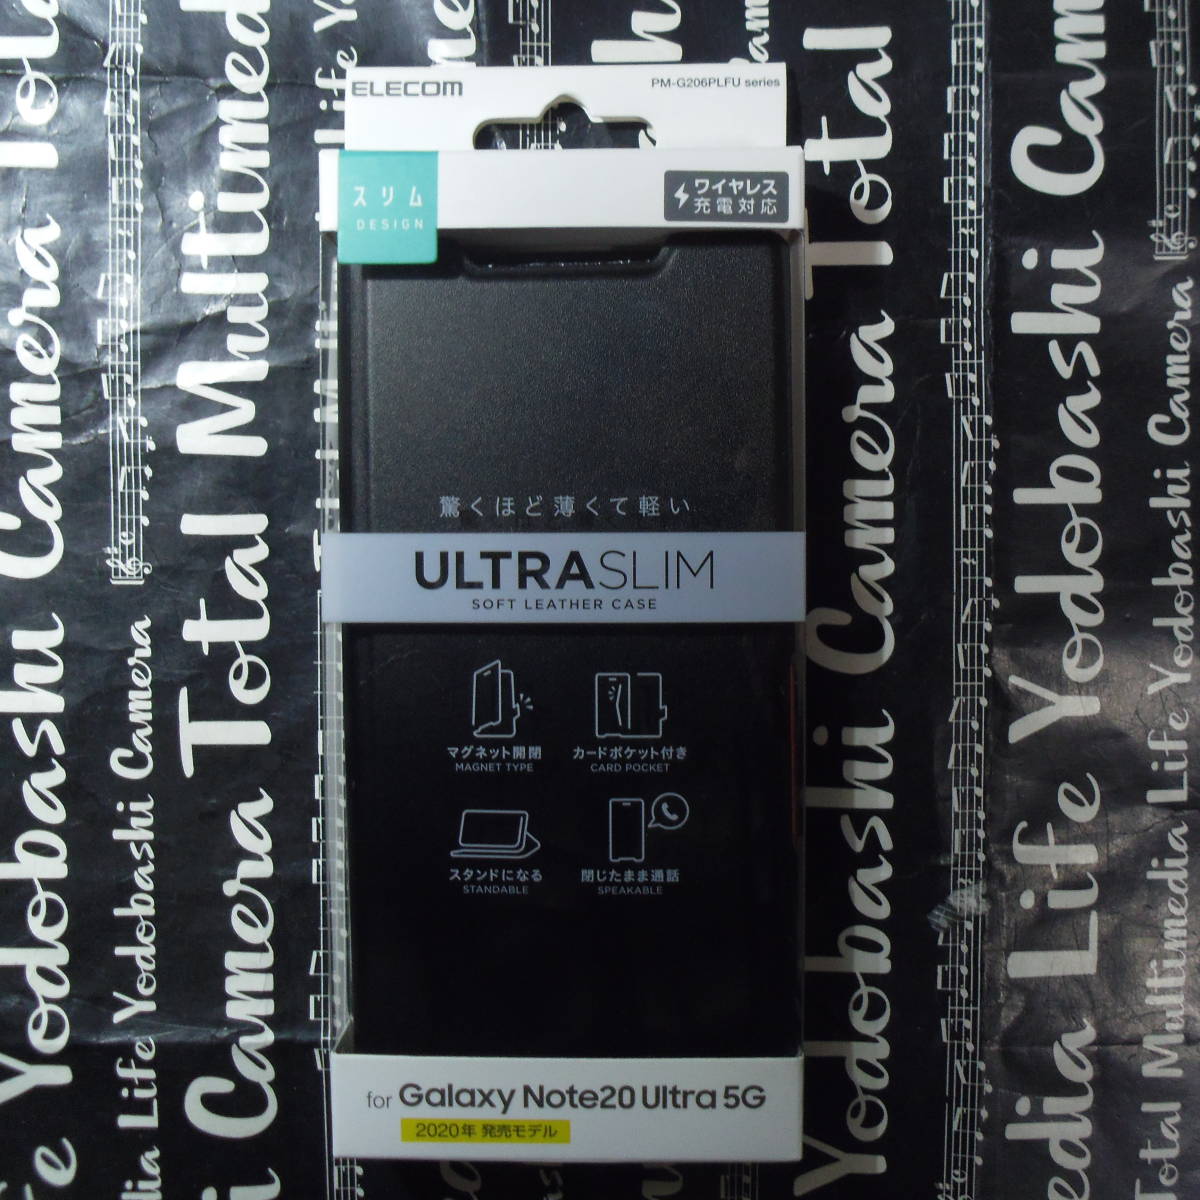 Galaxy Note20 Ultra 5G ソフトレザーケース 薄型超軽量なウルトラスリムタイプ 磁石付 ブラック ポリカーボネート カードポケット付ELECOMの画像1